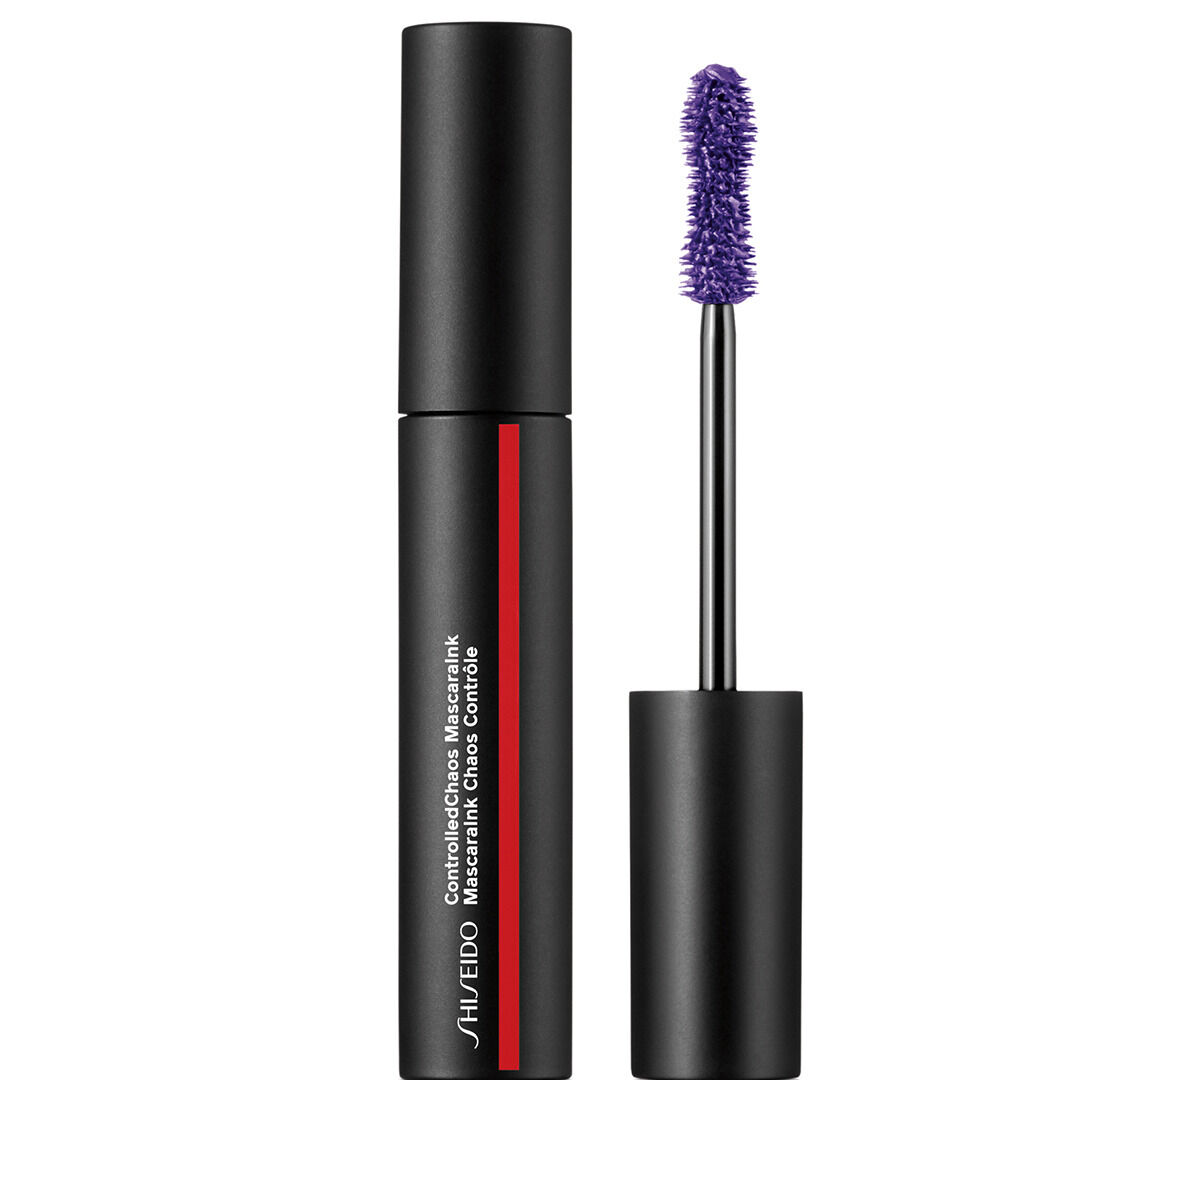 Shiseido Controlled Chaos Mascaraink тушь для ресниц 03 Violet Vibe, 11,5 мл